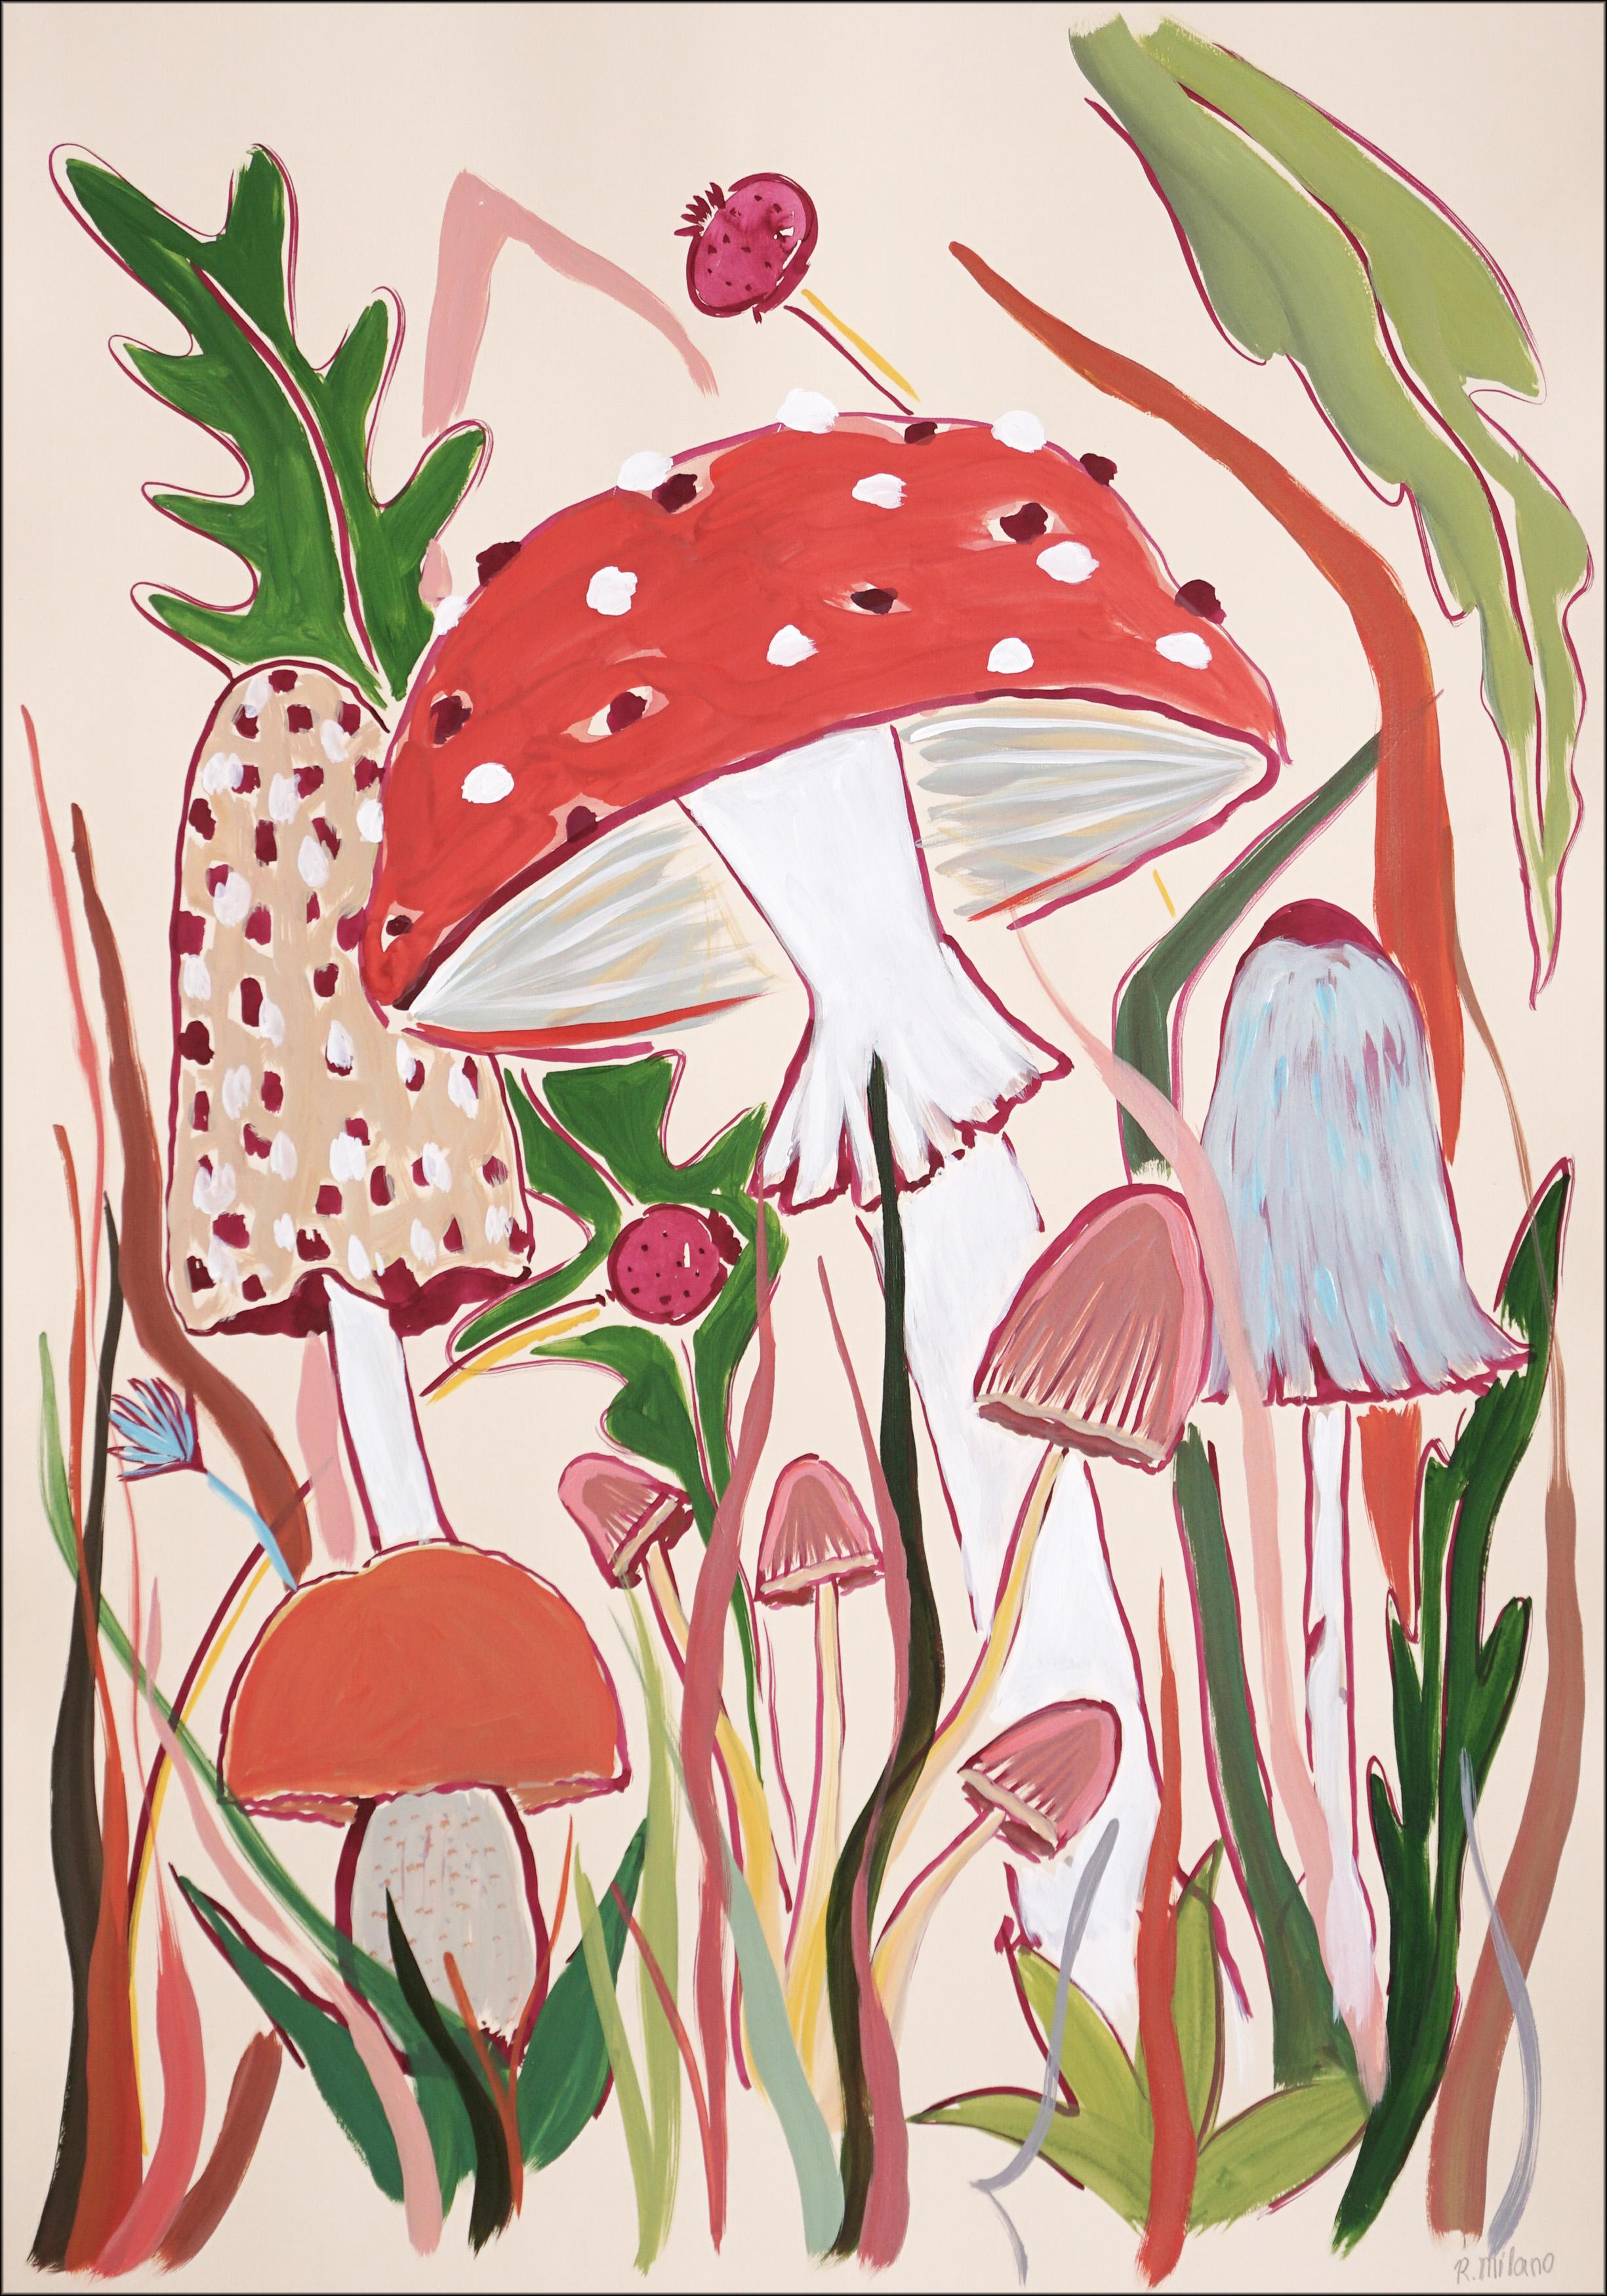 Romina Milano Still-Life Painting - Wild Mushrooms Harvest, Autumn, Magic Nature, Illustration Style, Red Warm Tones